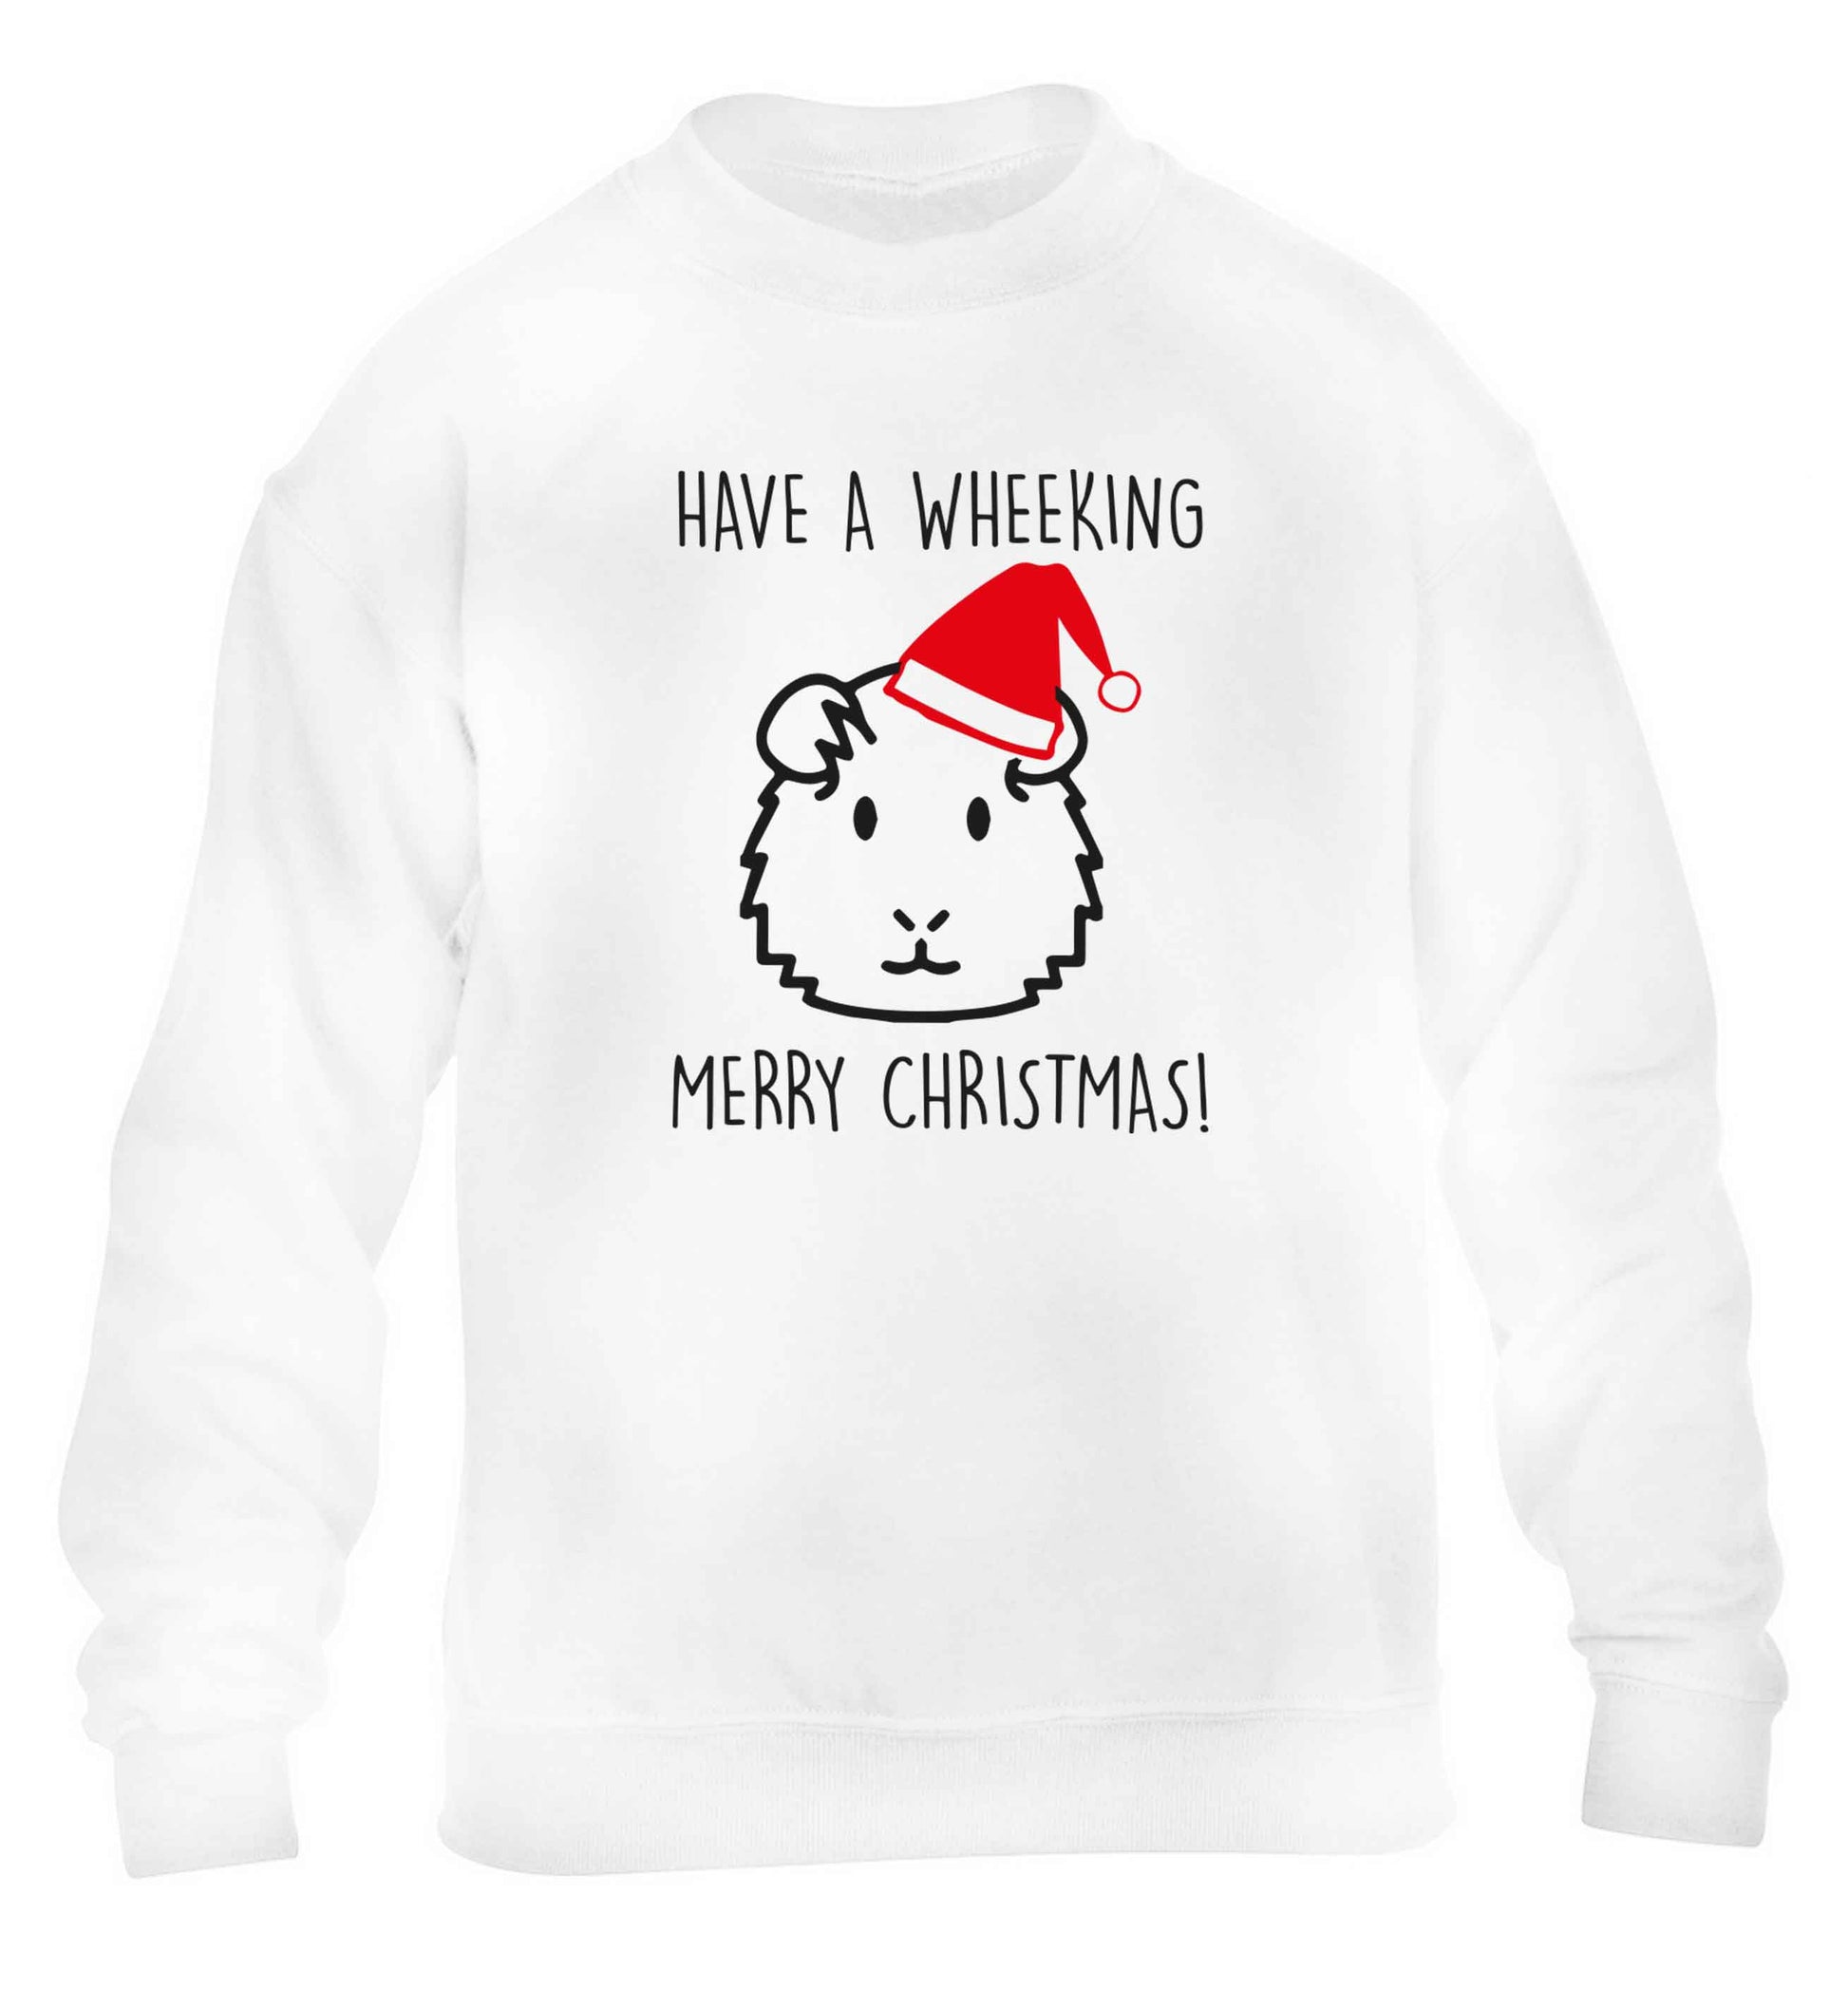 Have a wheeking merry Christmas children's white sweater 12-13 Years